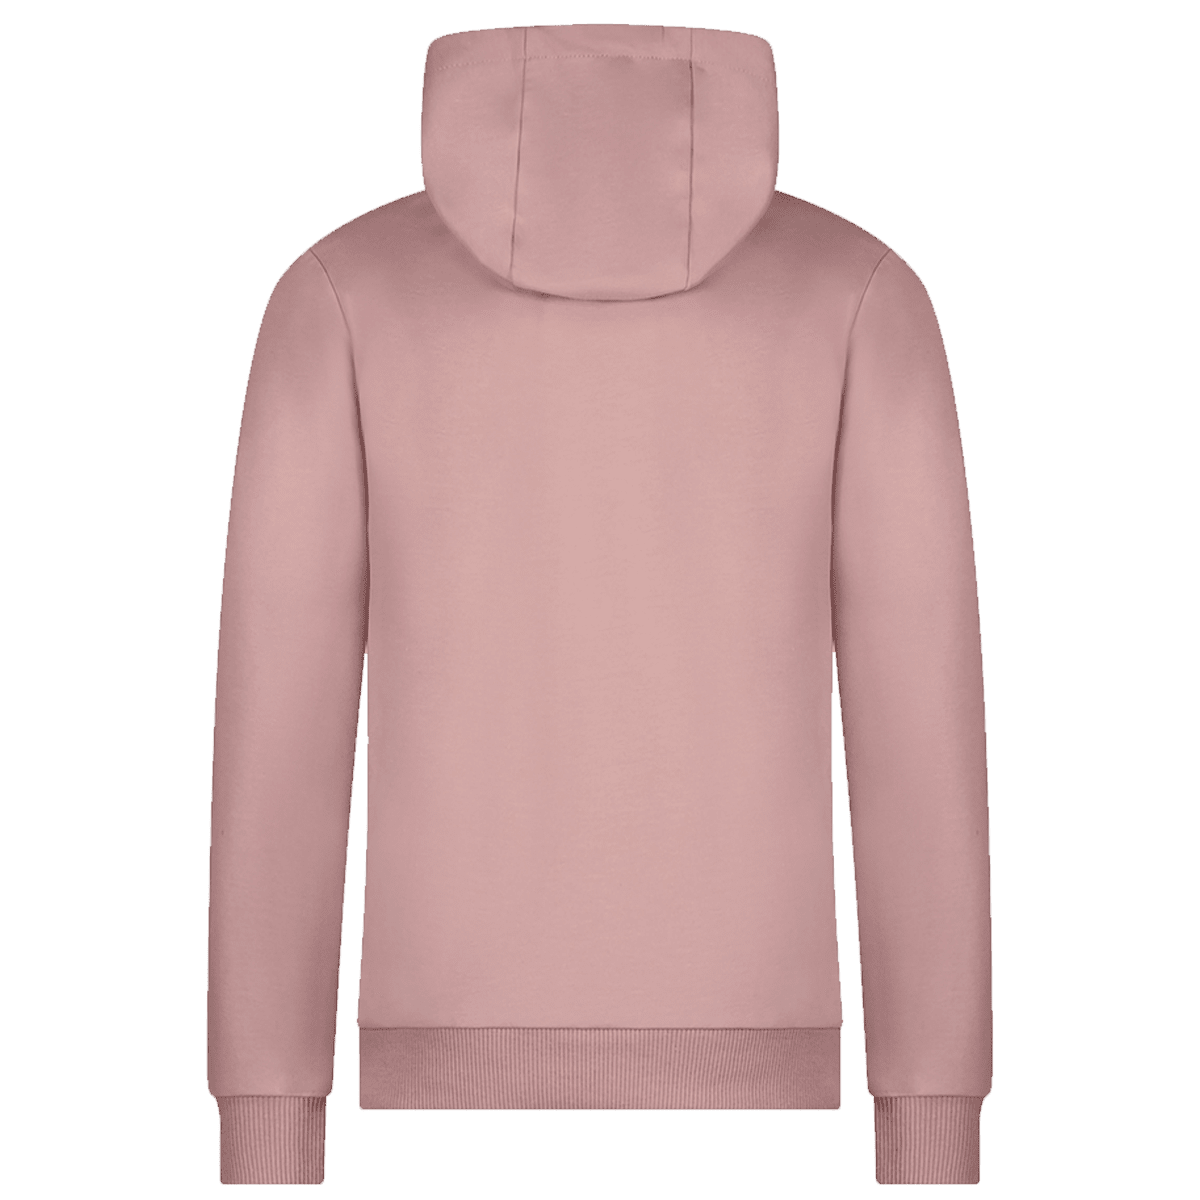 GARÇON hooded logo sweater - Le Chic Fashion